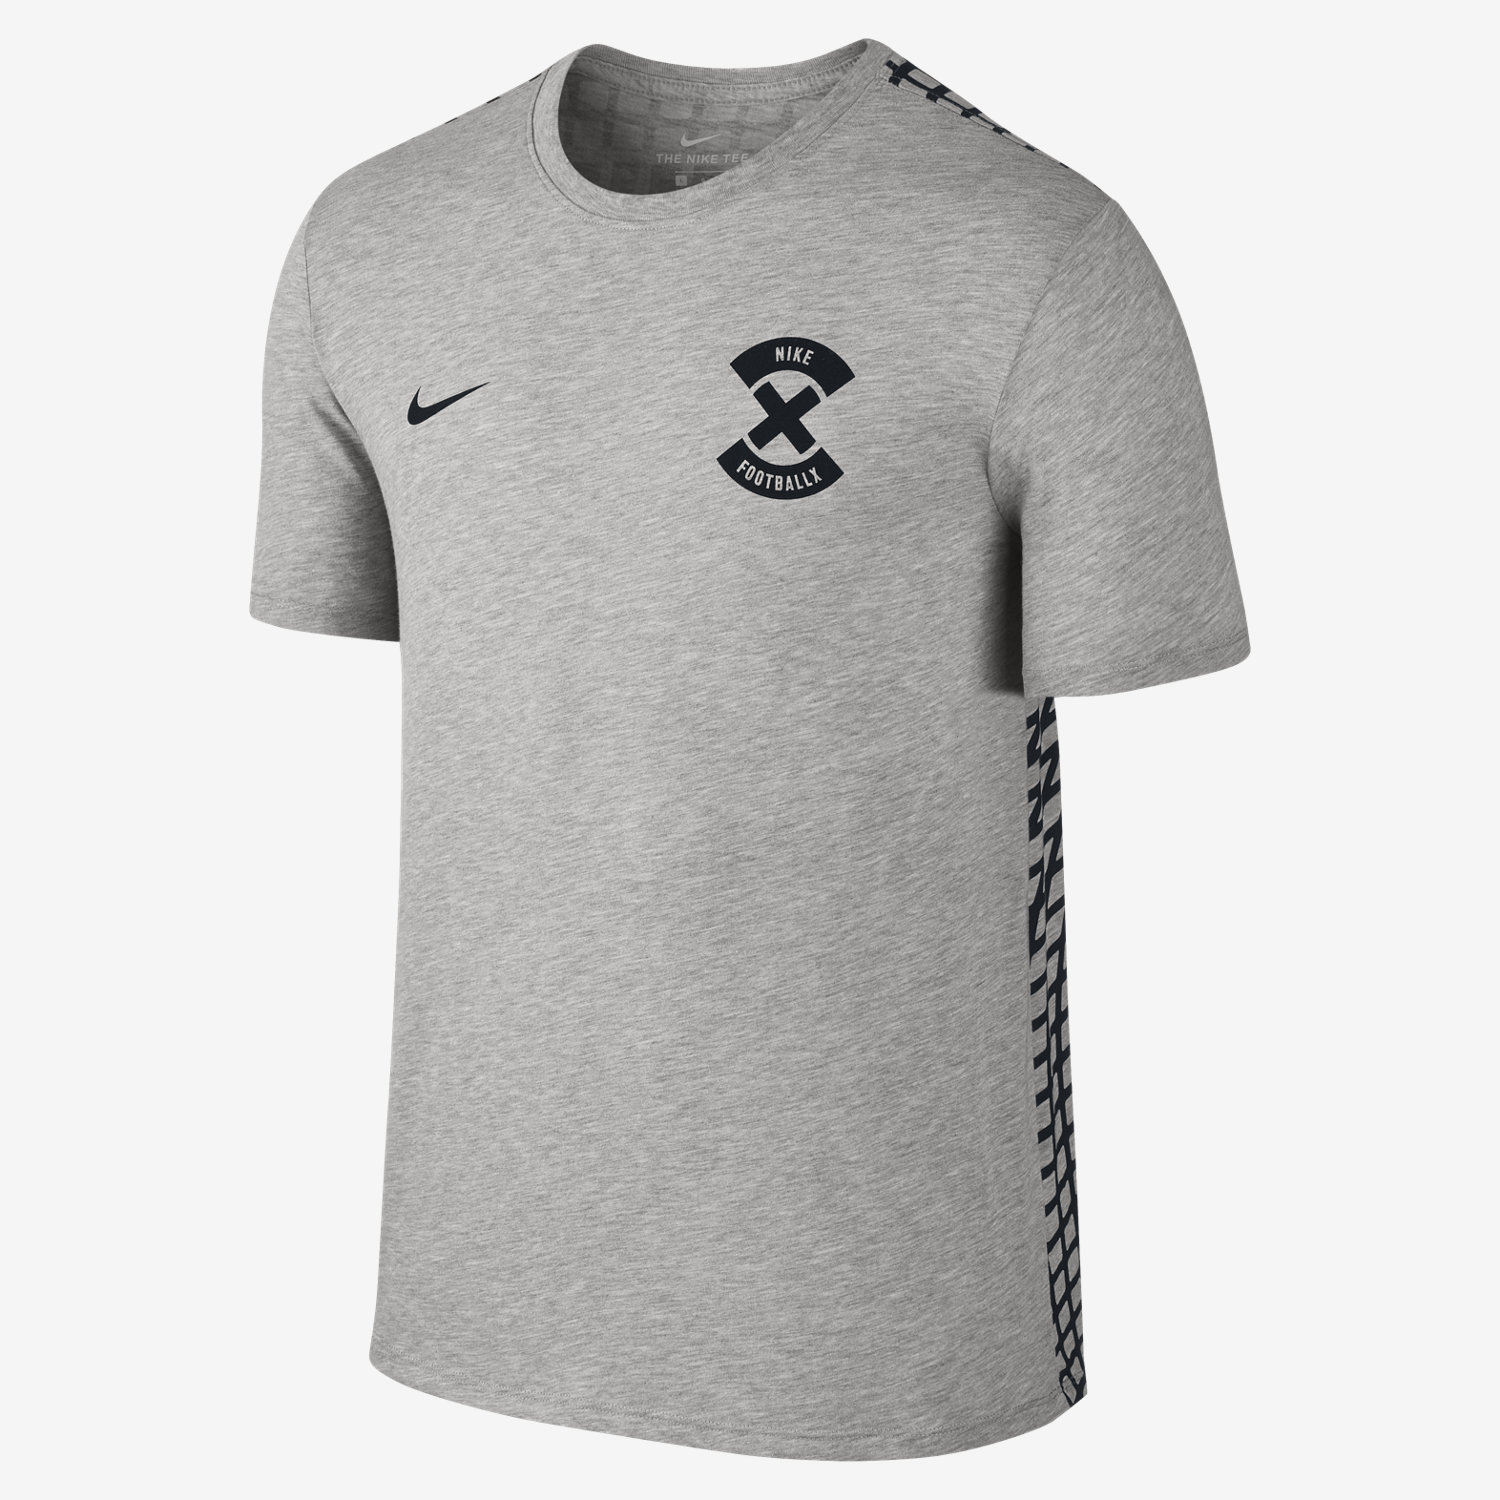 Nike Dry Football X - Men's T-Shirt